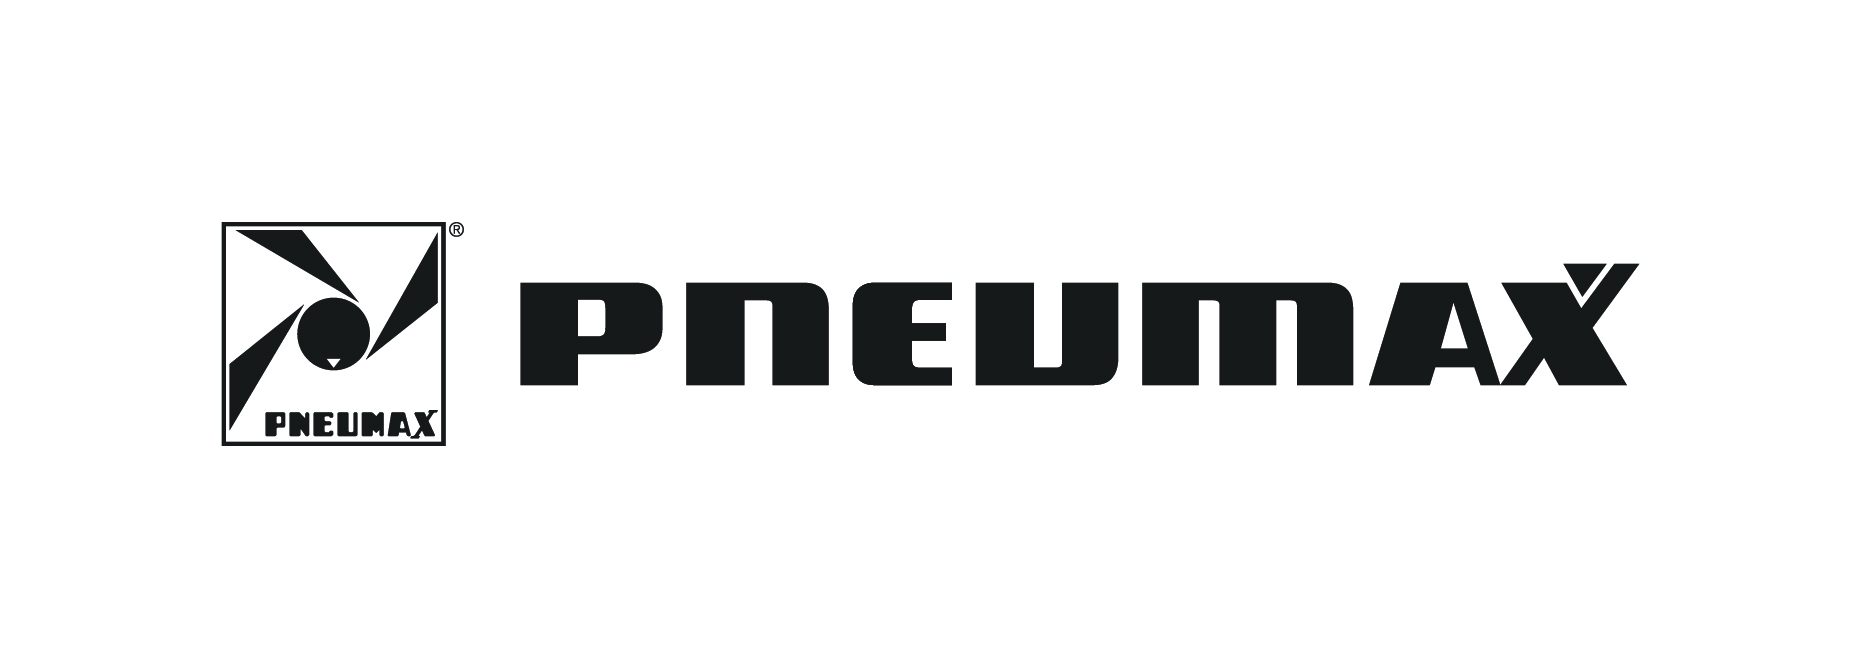 Pneumax Logo on a white background